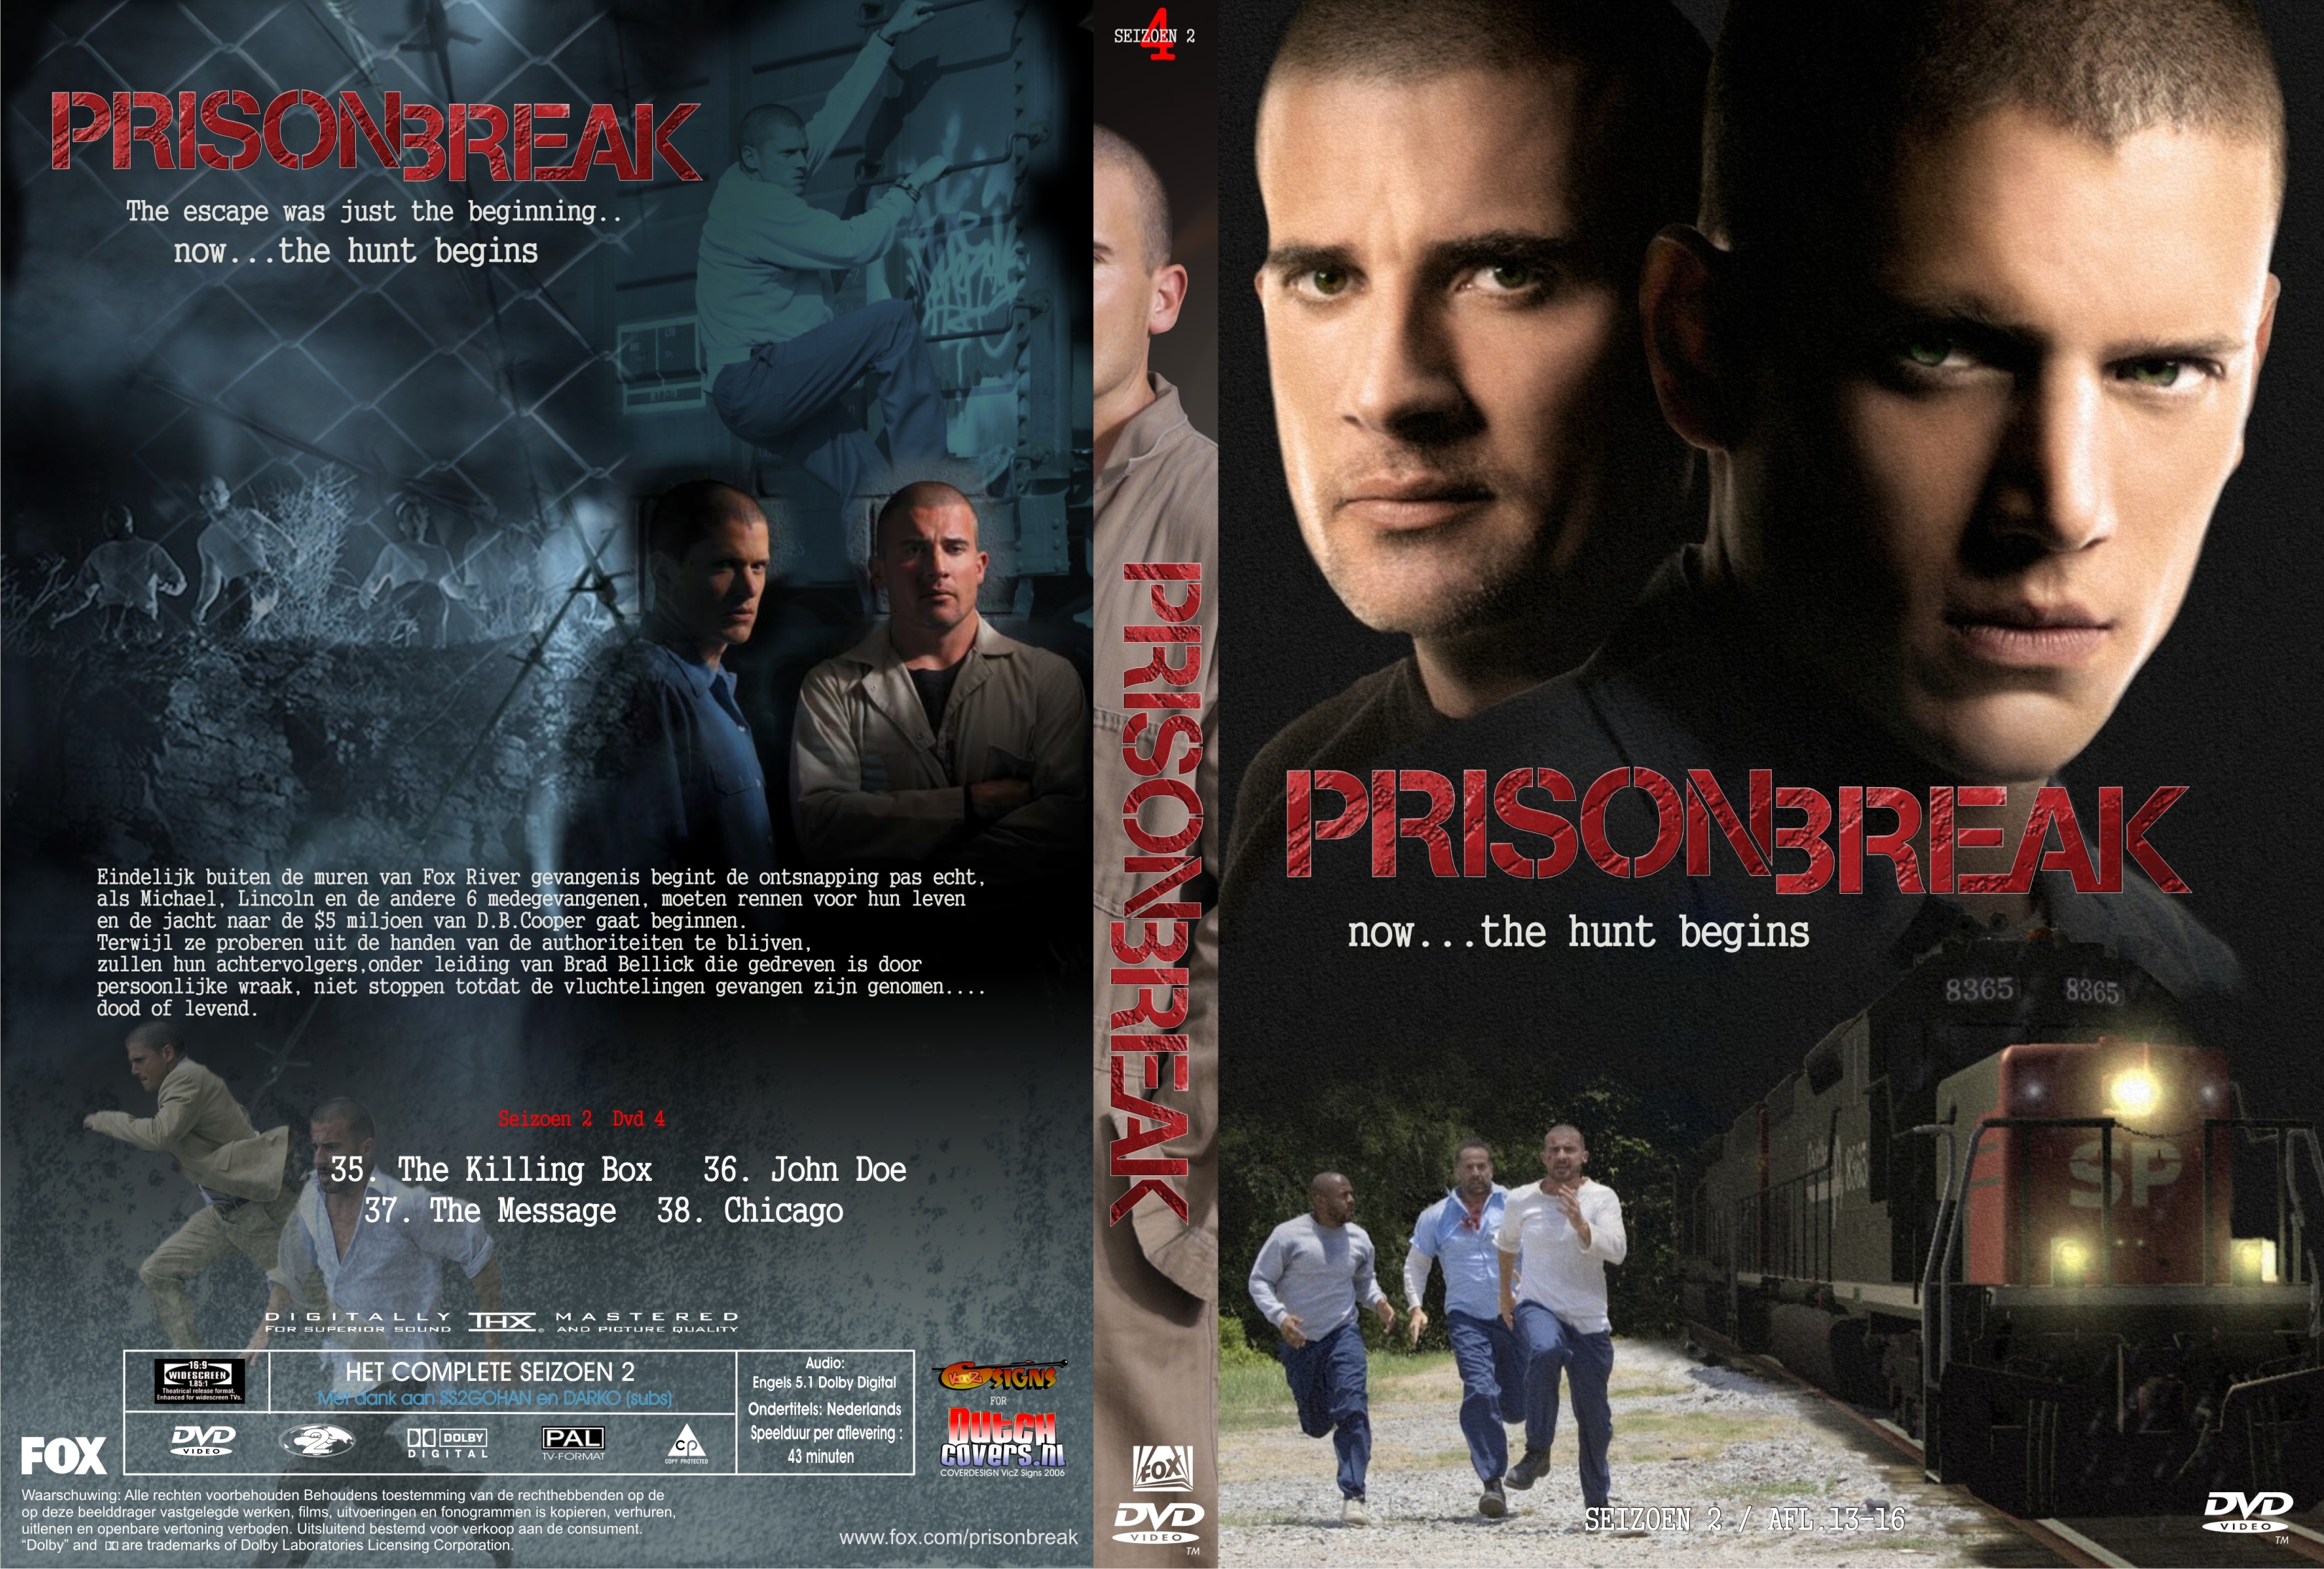 Prison Break S2dvd4